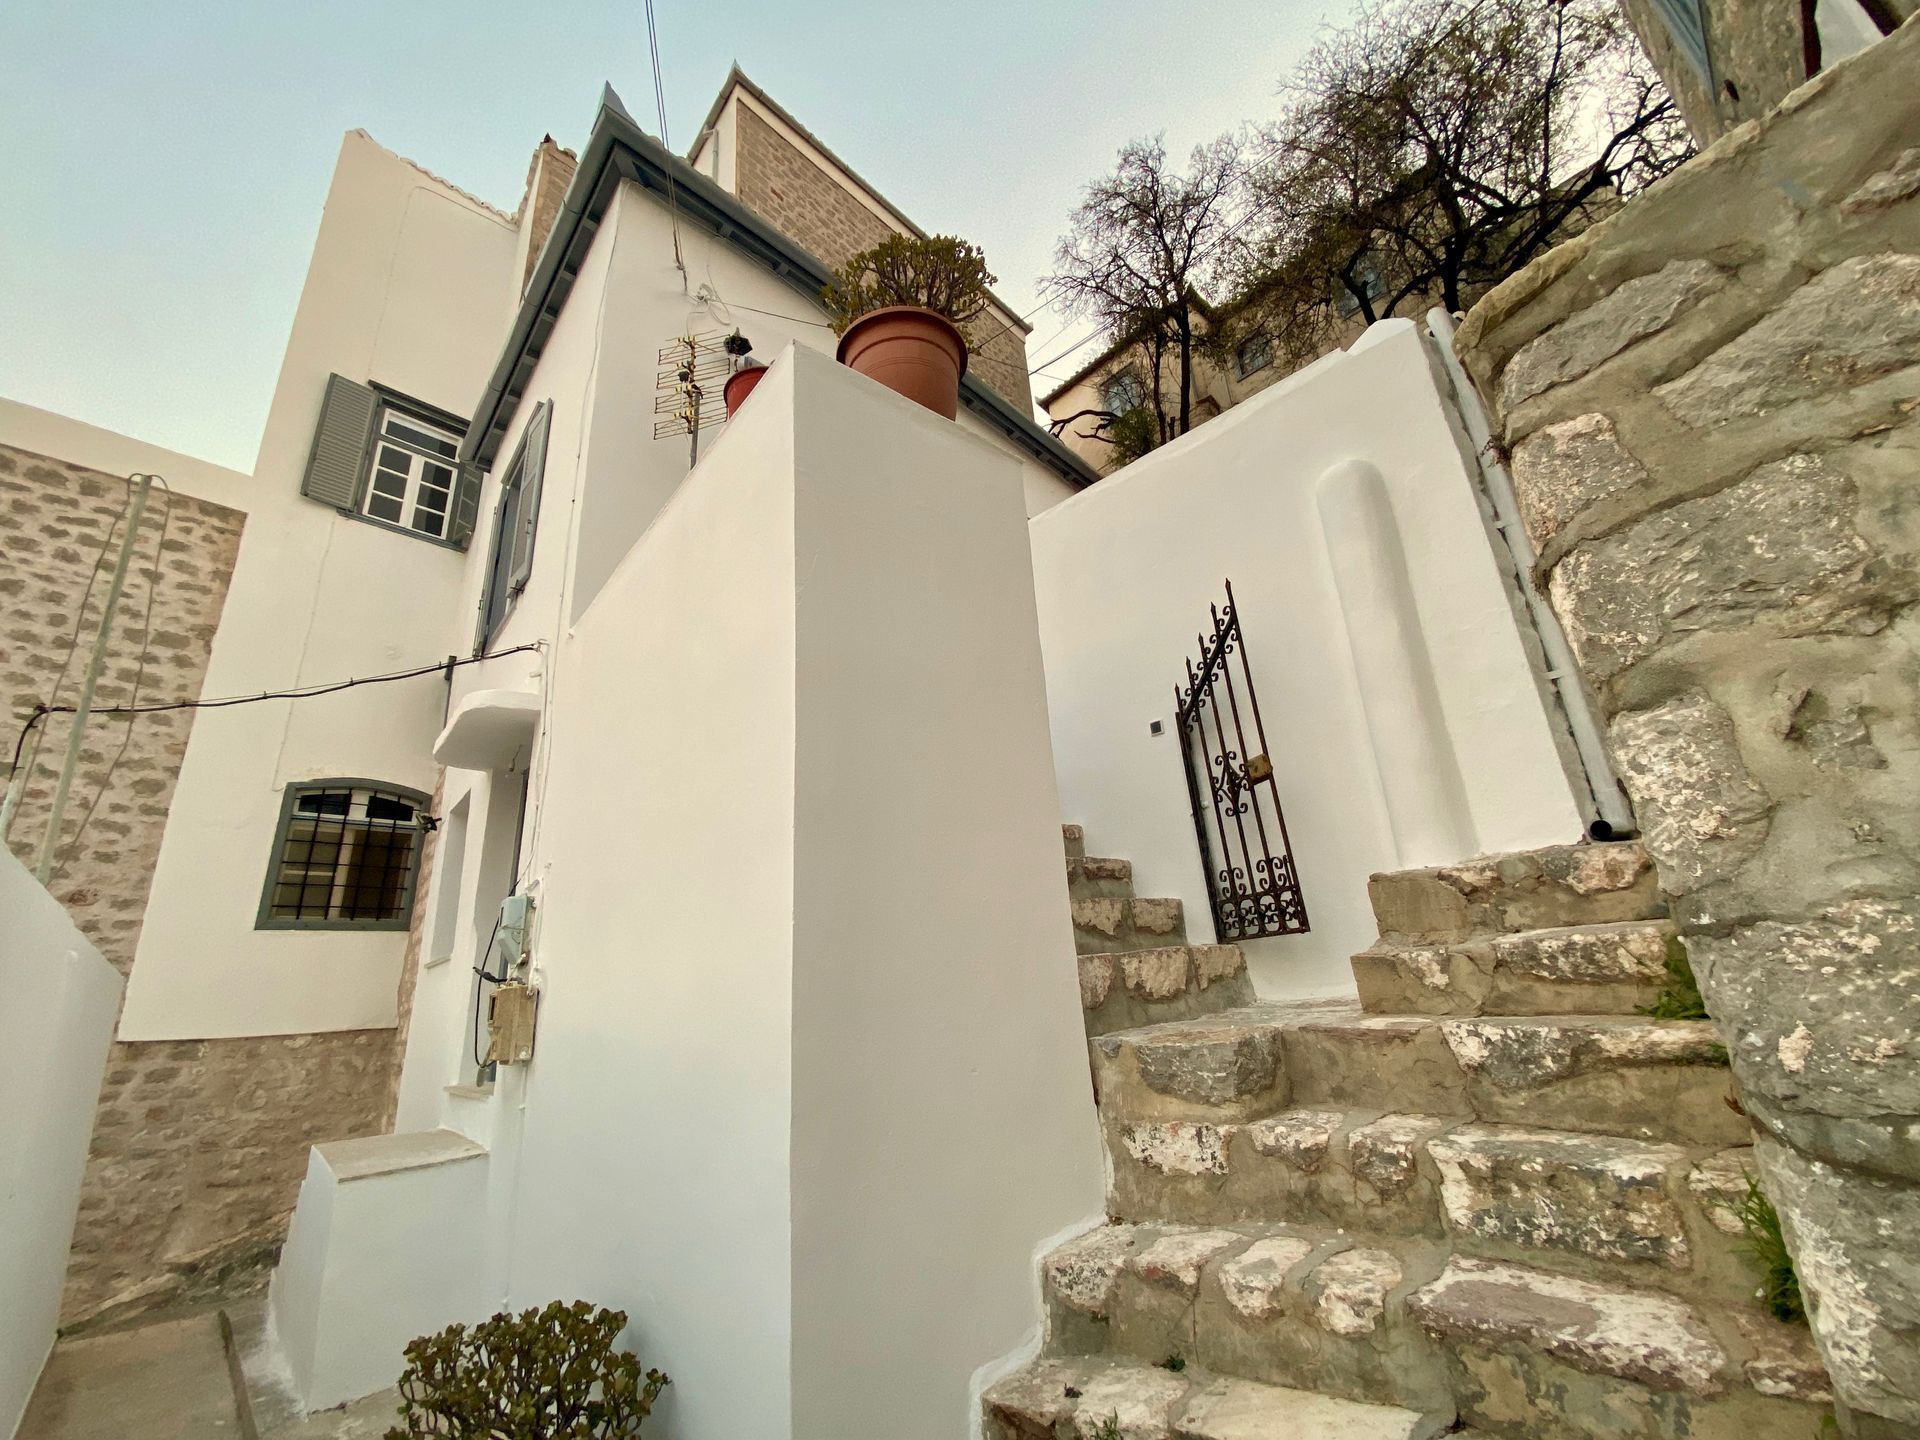 1.5 bedroom house for sale on Hydra Island Greece